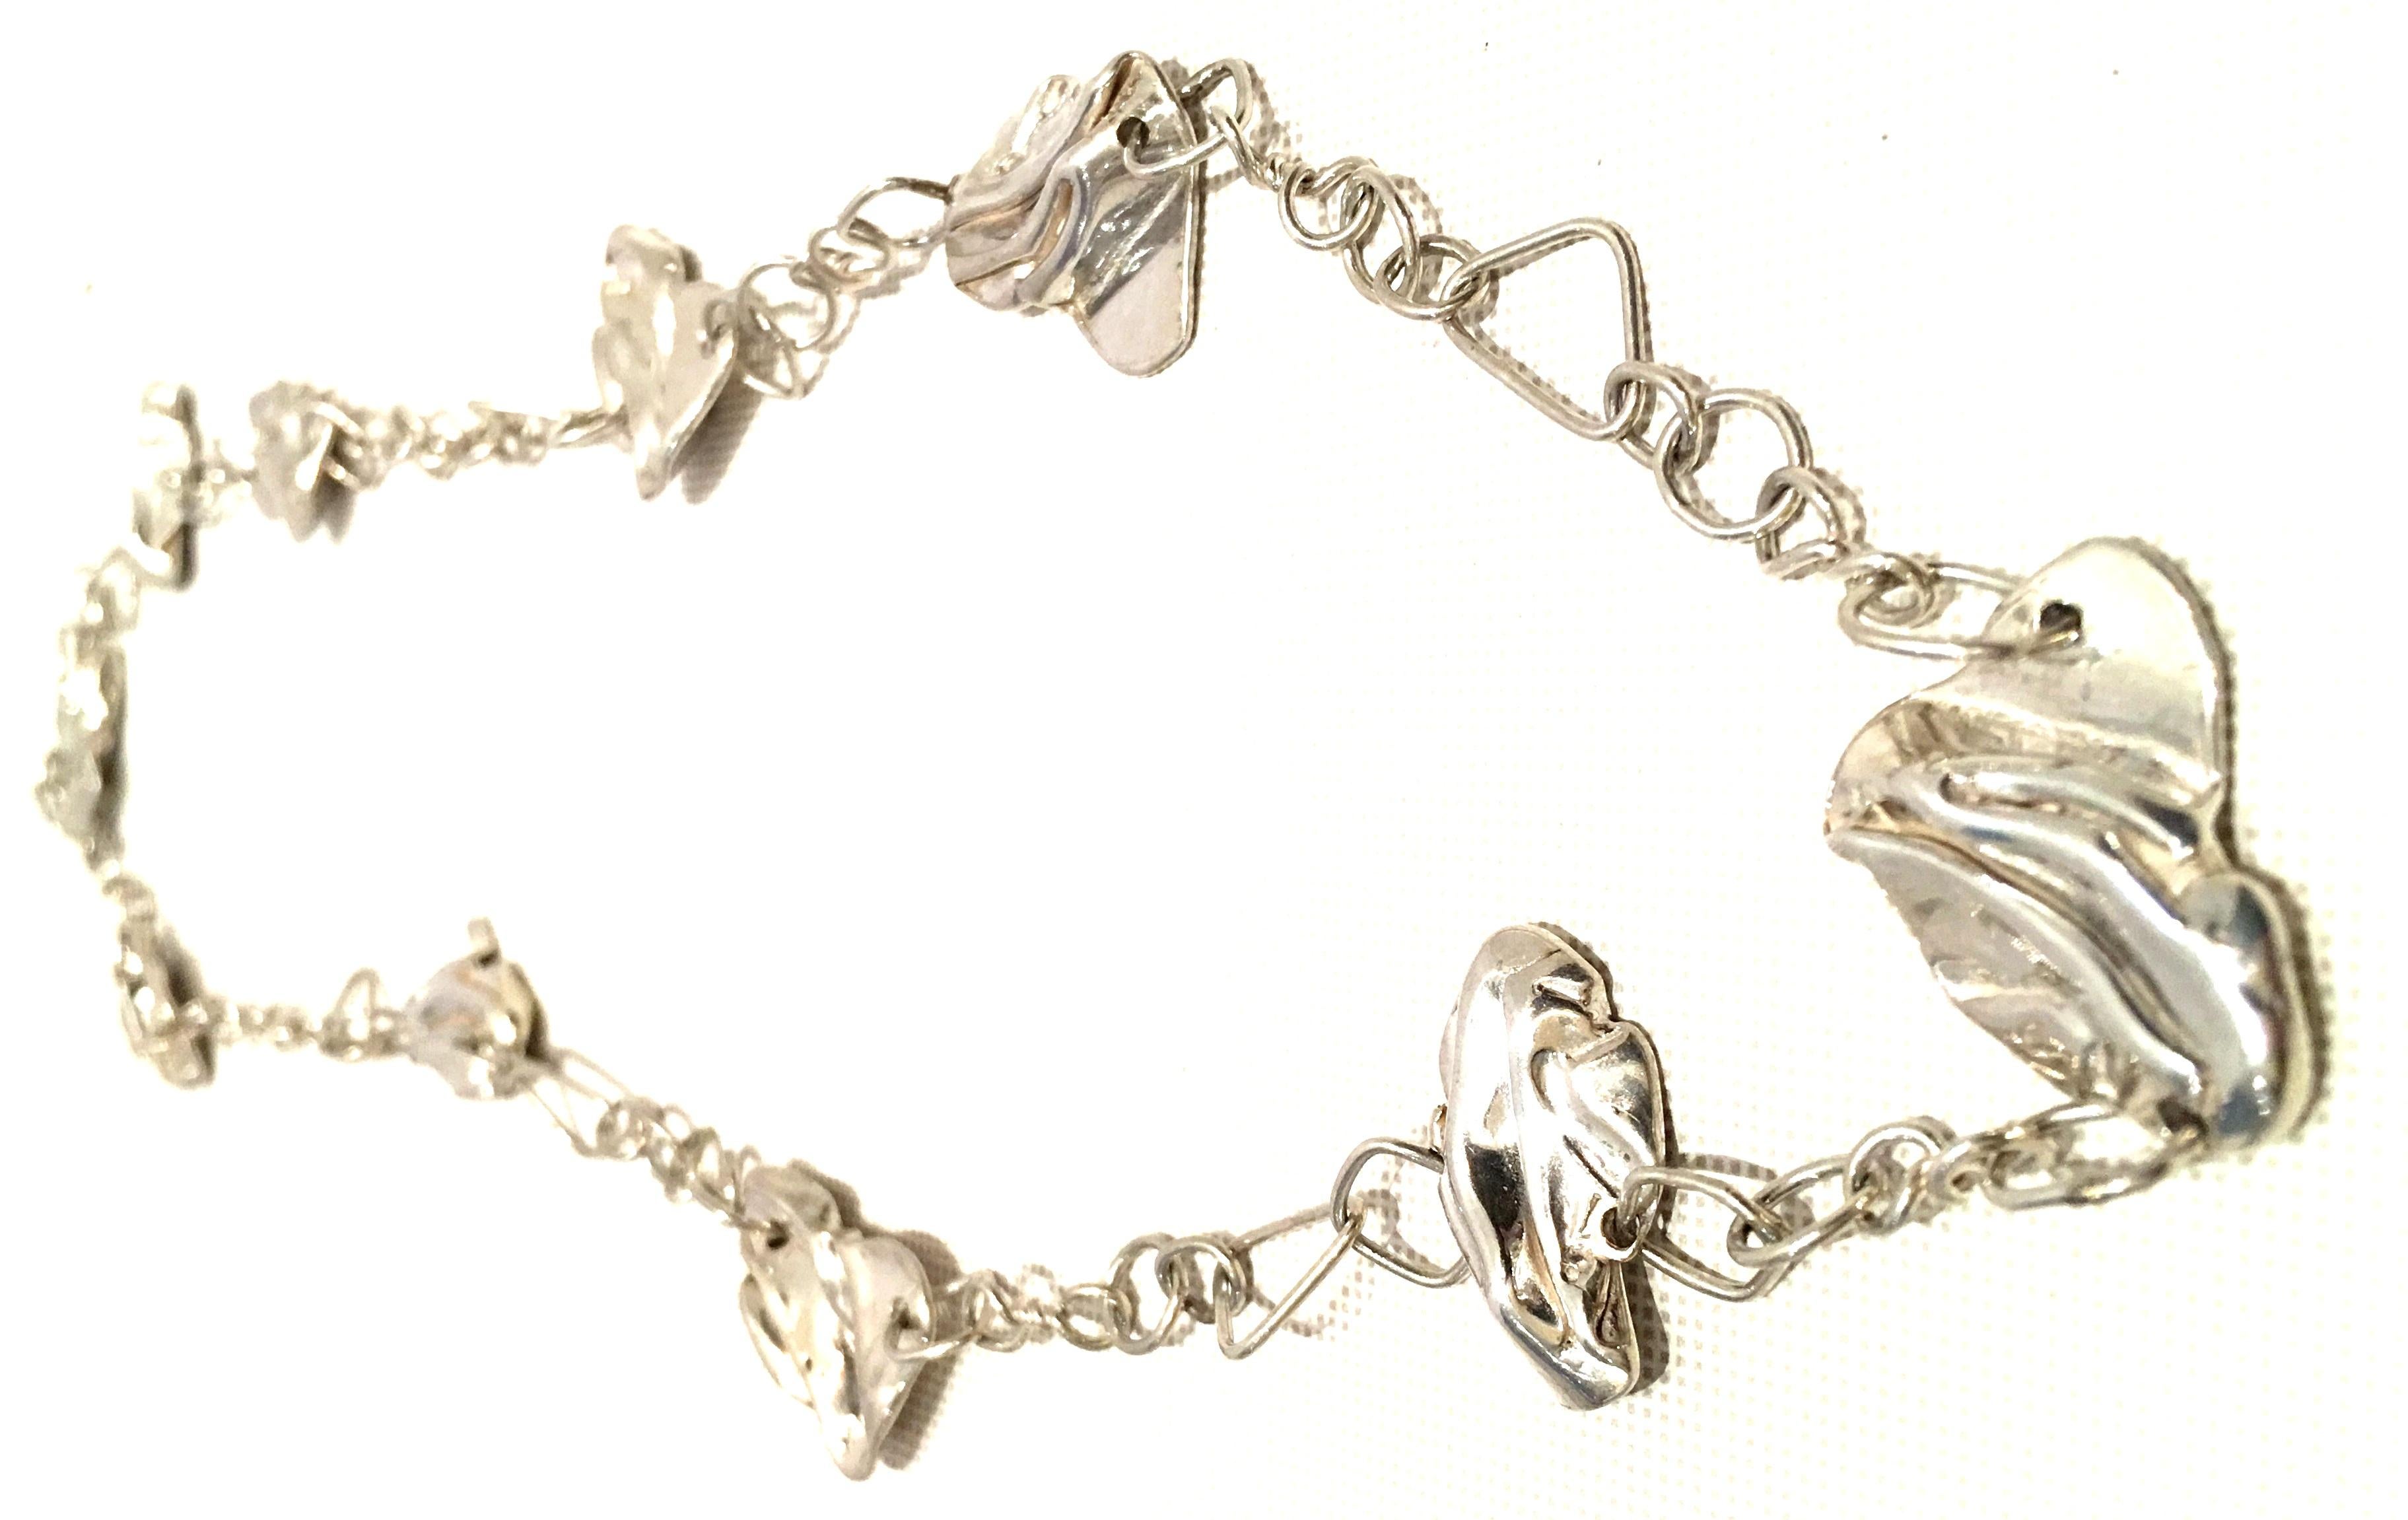 Vintage Sterling Silver Modernist Organic Form Chain Link Necklace For Sale 1